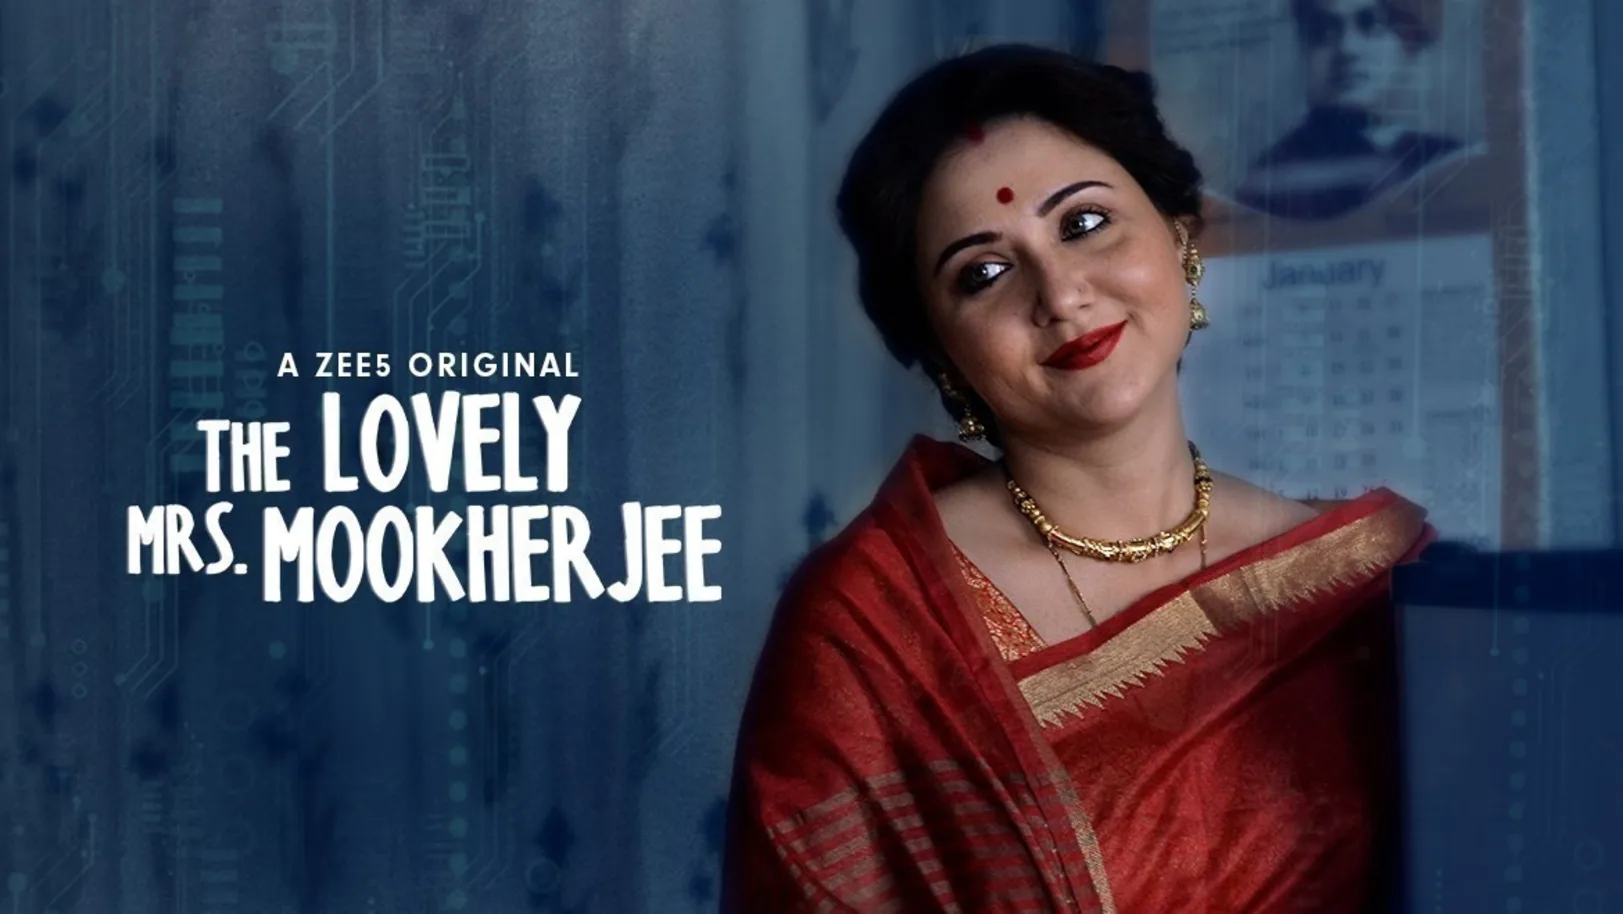 The Lovely Mrs. Mookherjee Movie